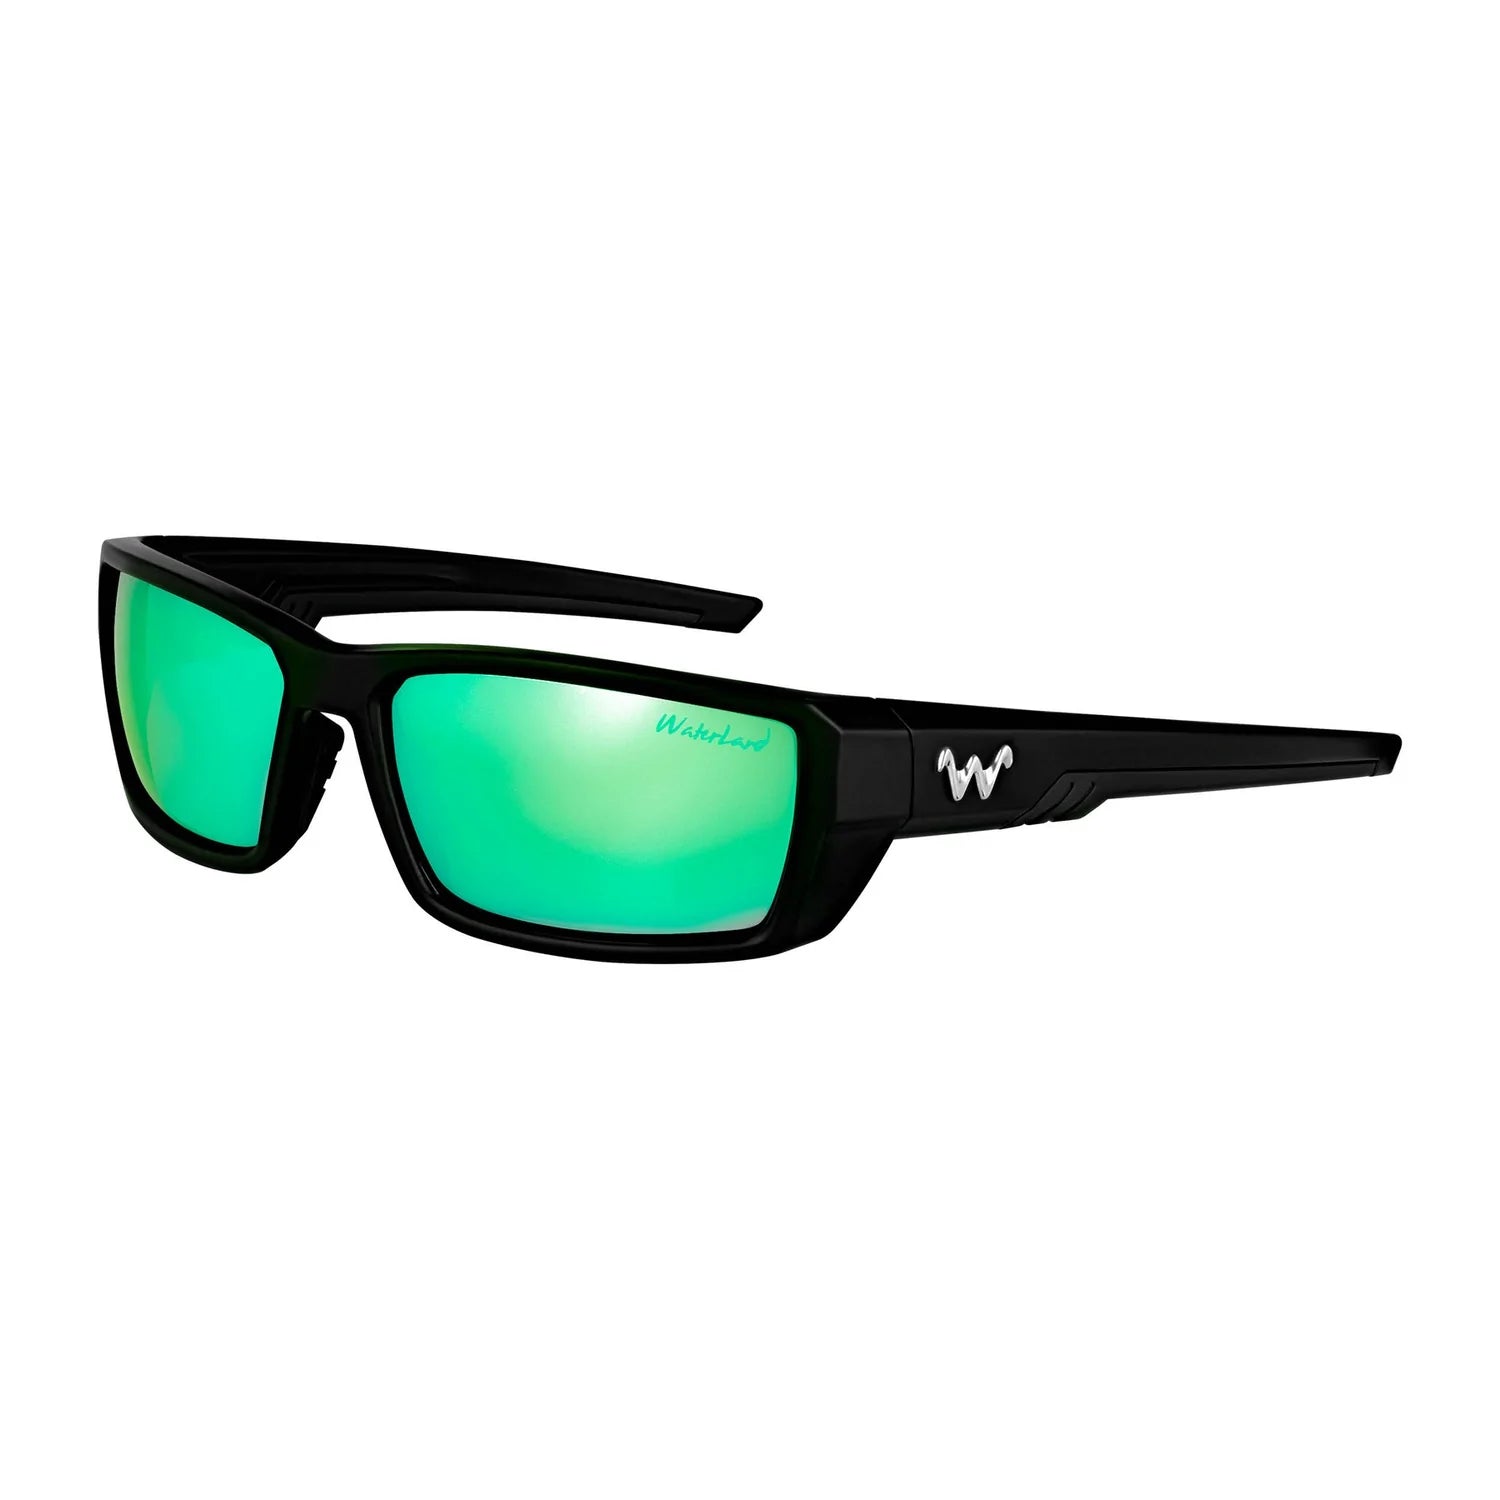 Waterland Ashor Sunglasses Black/Green Mirror